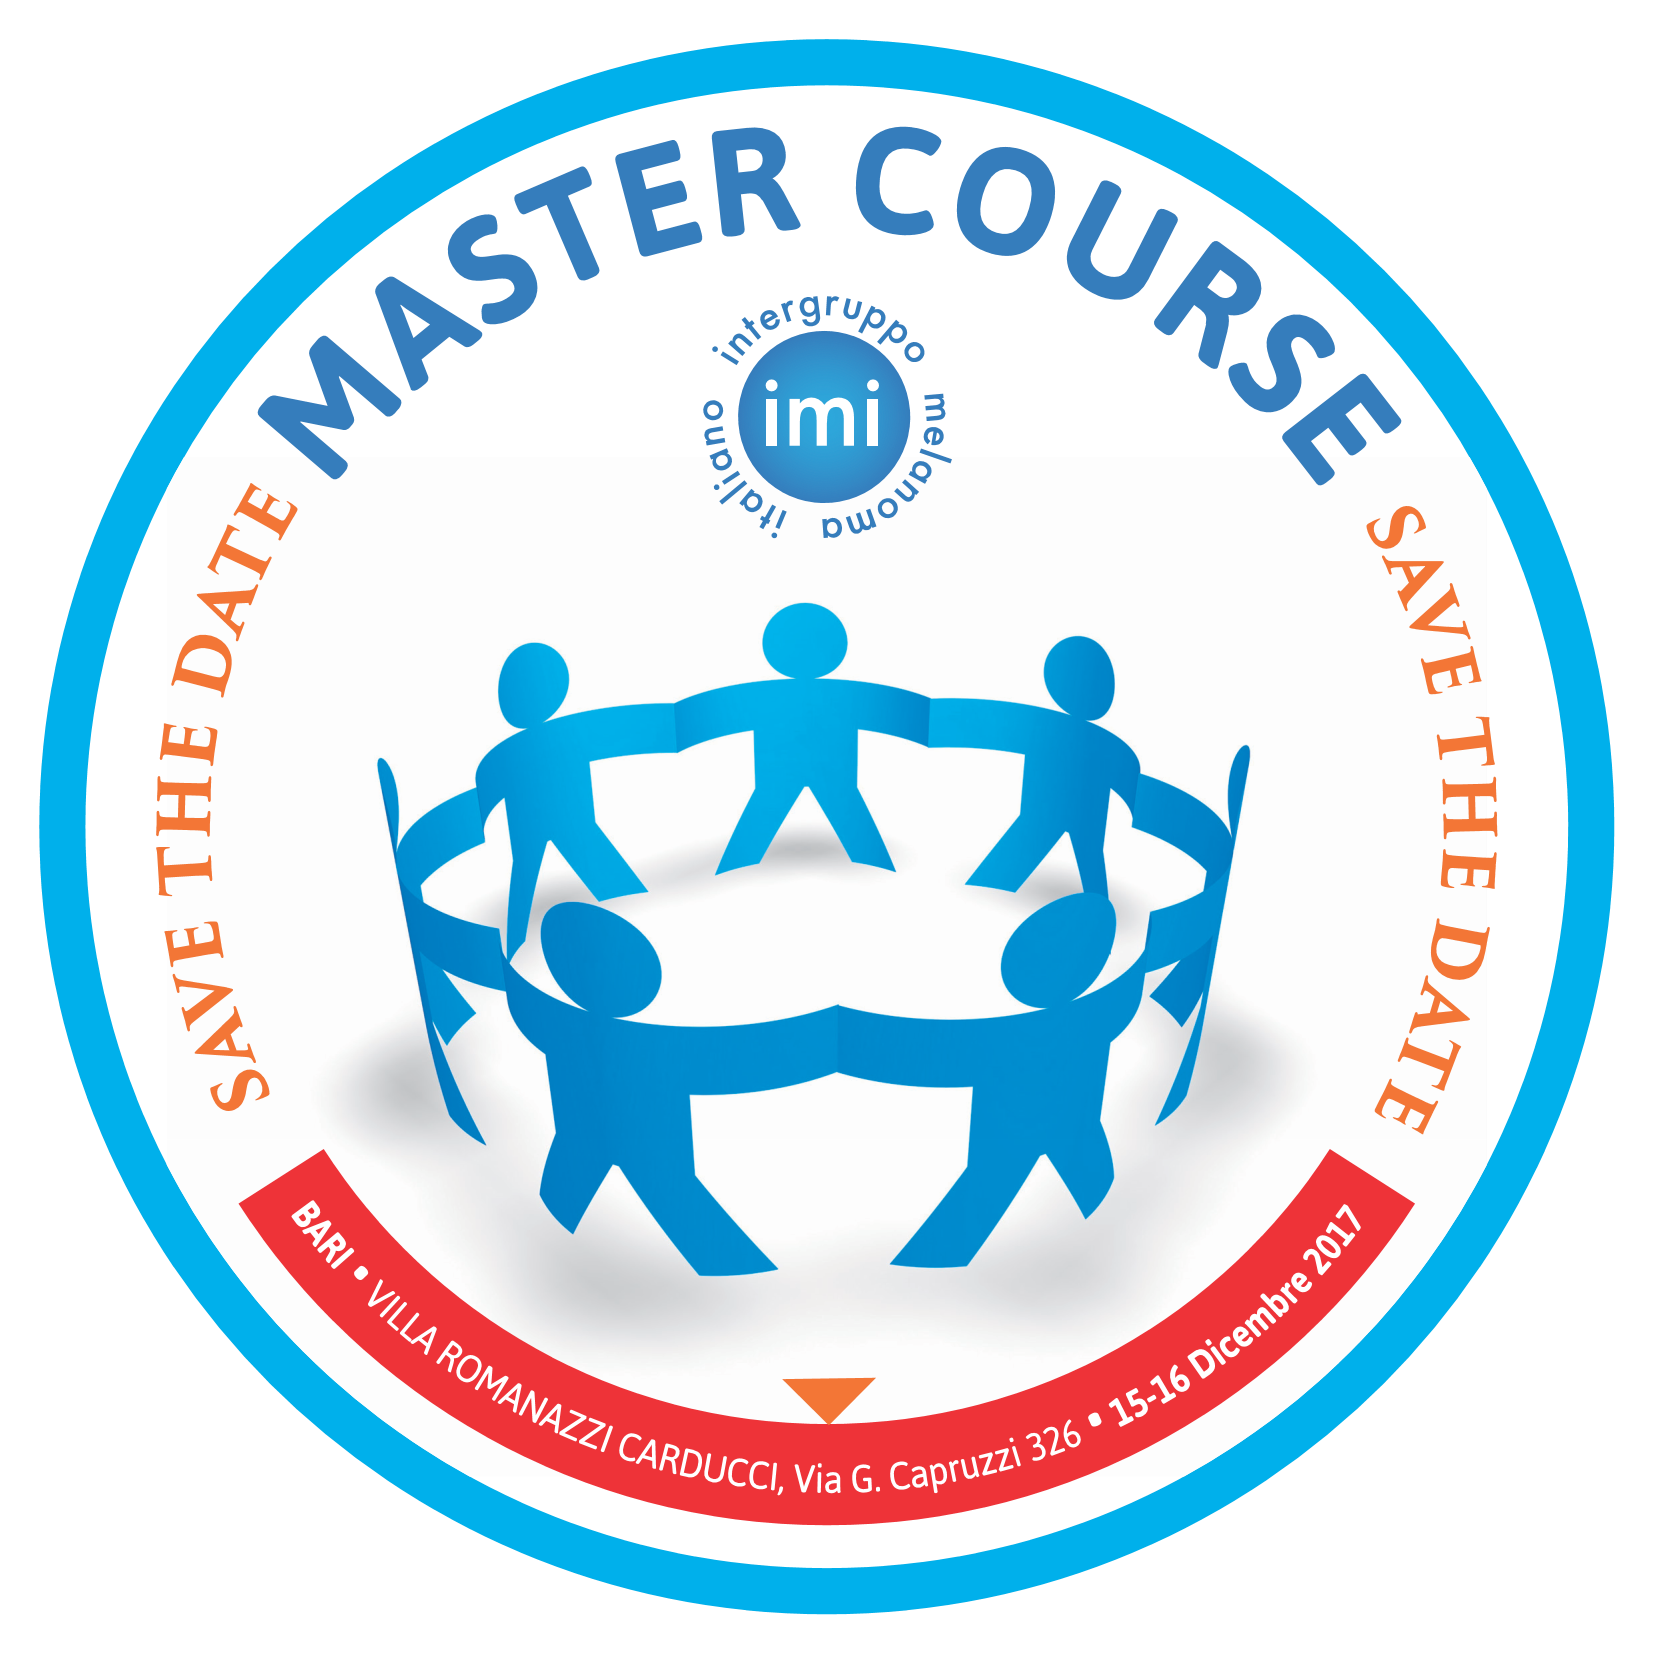 IMI Save The Date Master Course BARI